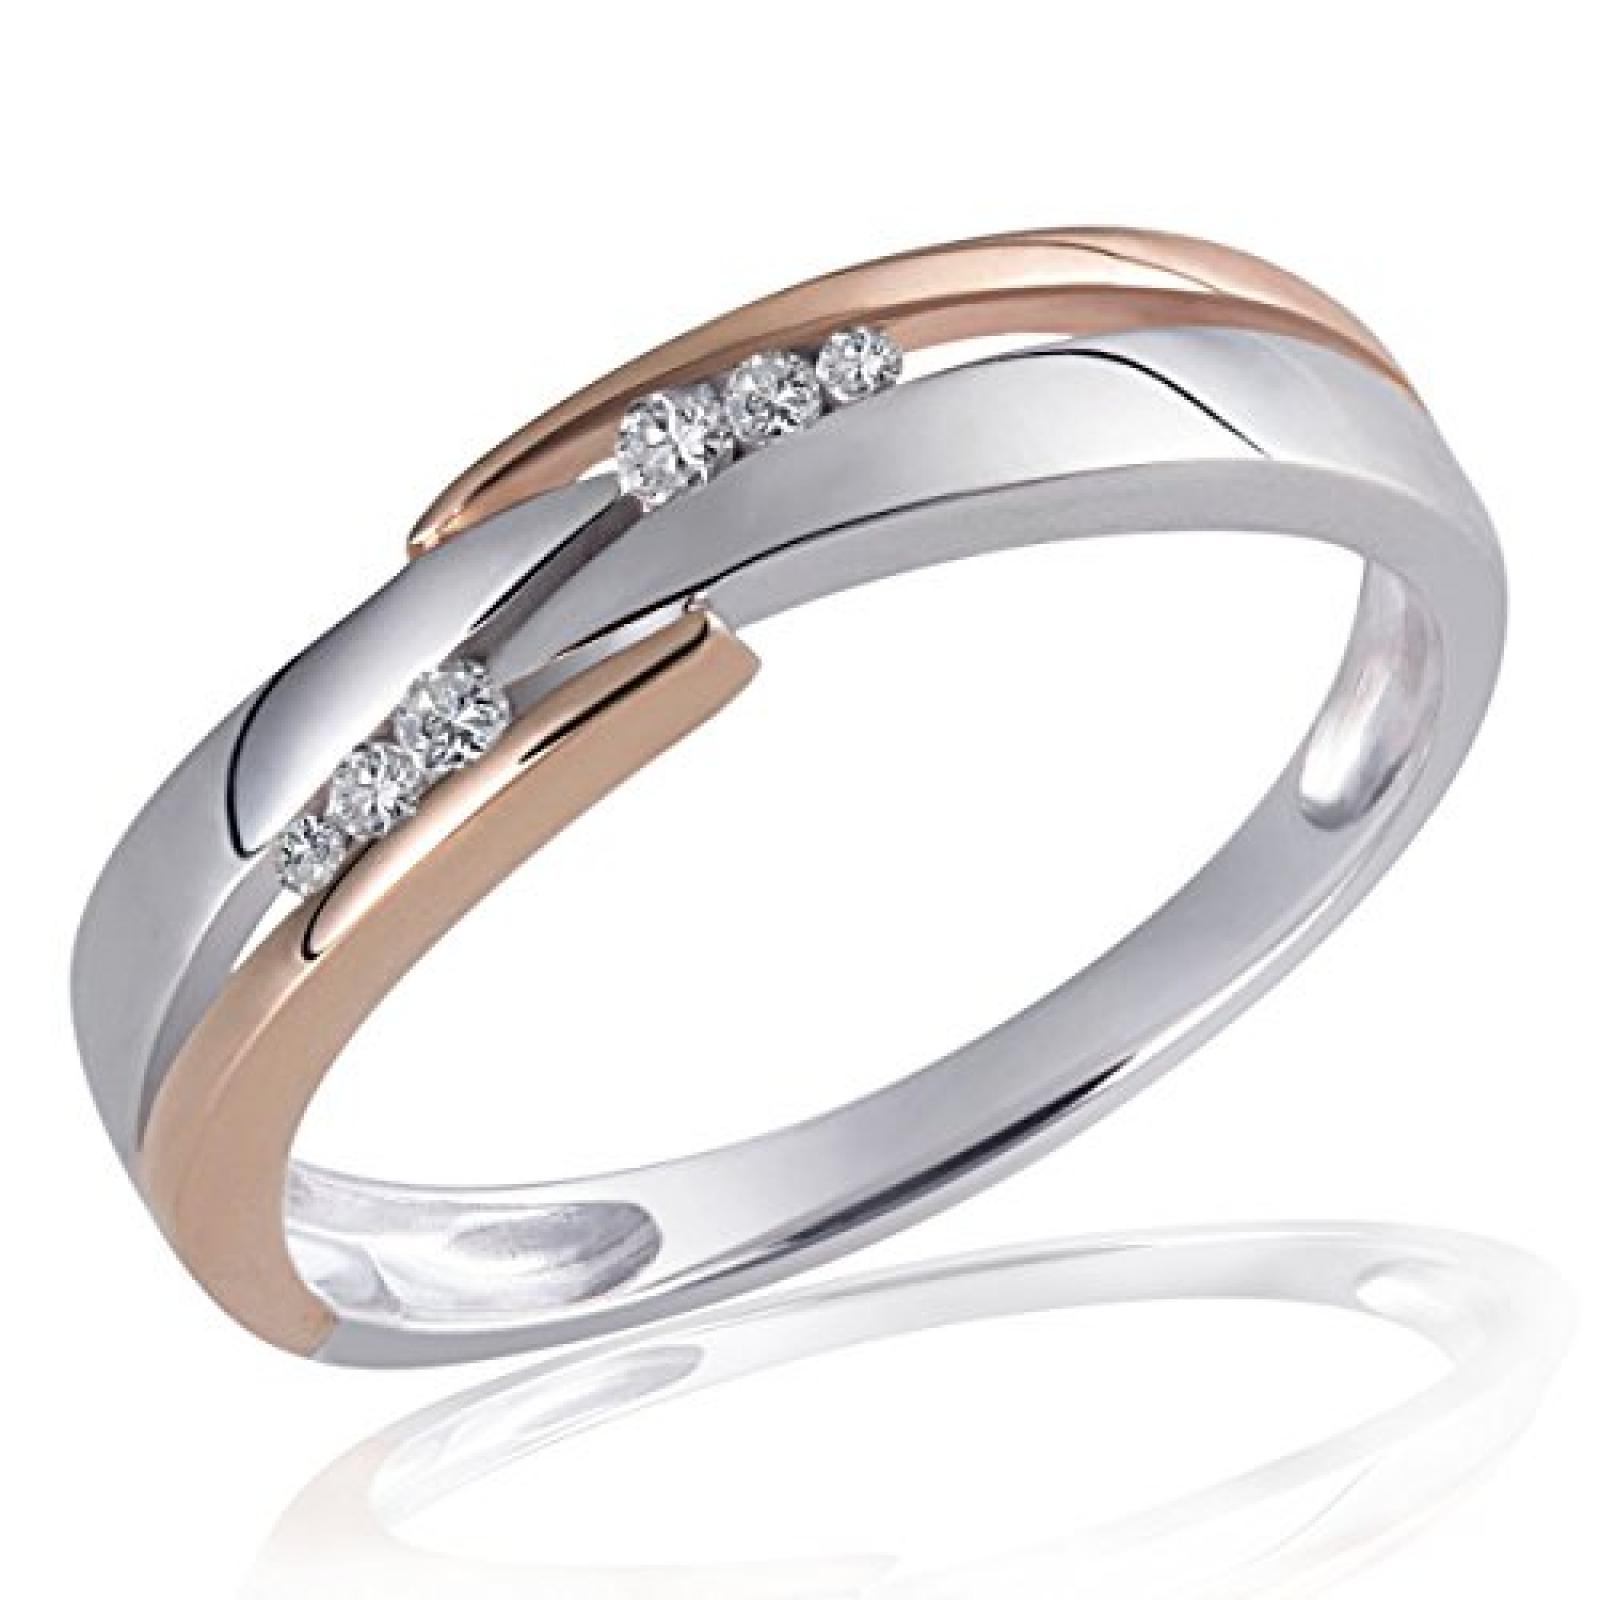 Goldmaid Damen-Ring 925 Sterling Silber weiß Diamanten 6 Diamanten 0,07 ct. Sd R5230S 